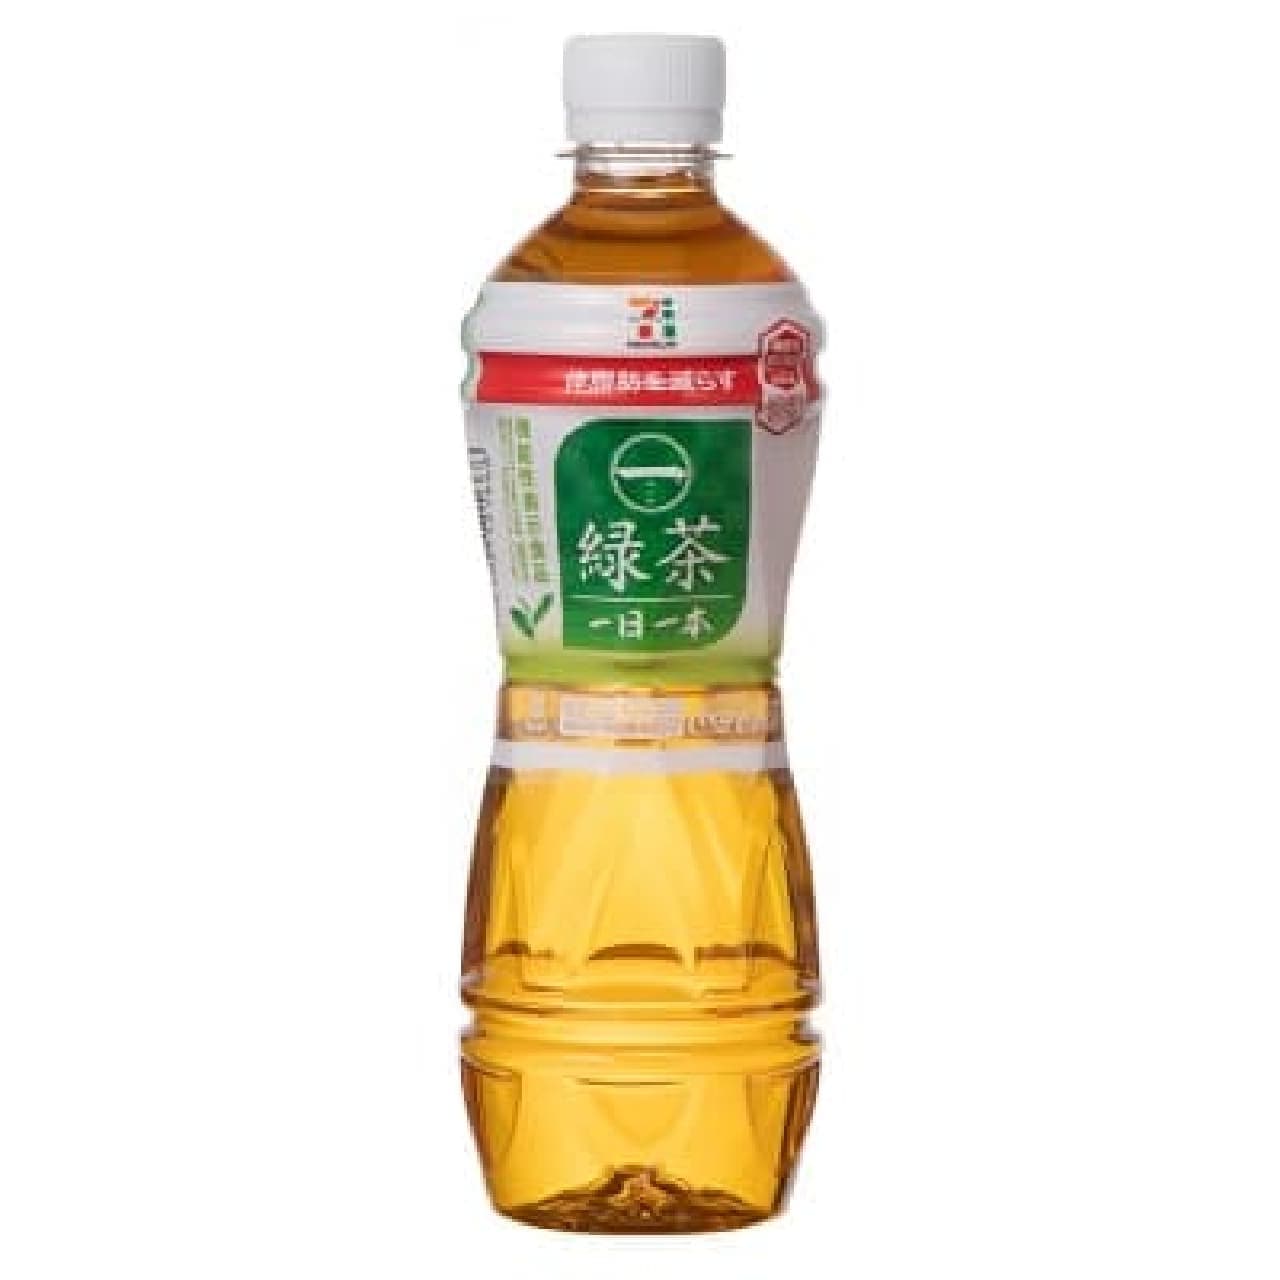 7-ELEVEN Ichi (Hajime) green tea, a bottle a day, 500 ml.